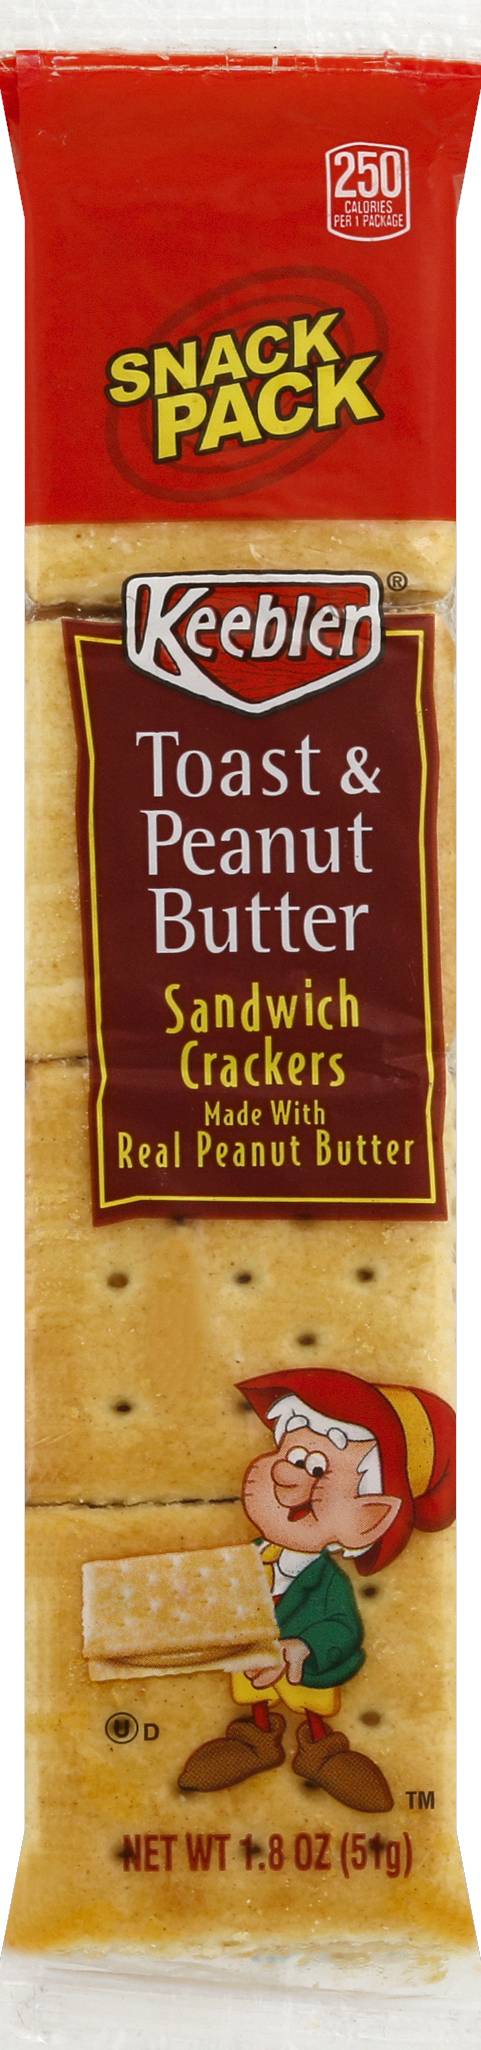 Keebler Toast & Peanut Butter Sandwich Crackers